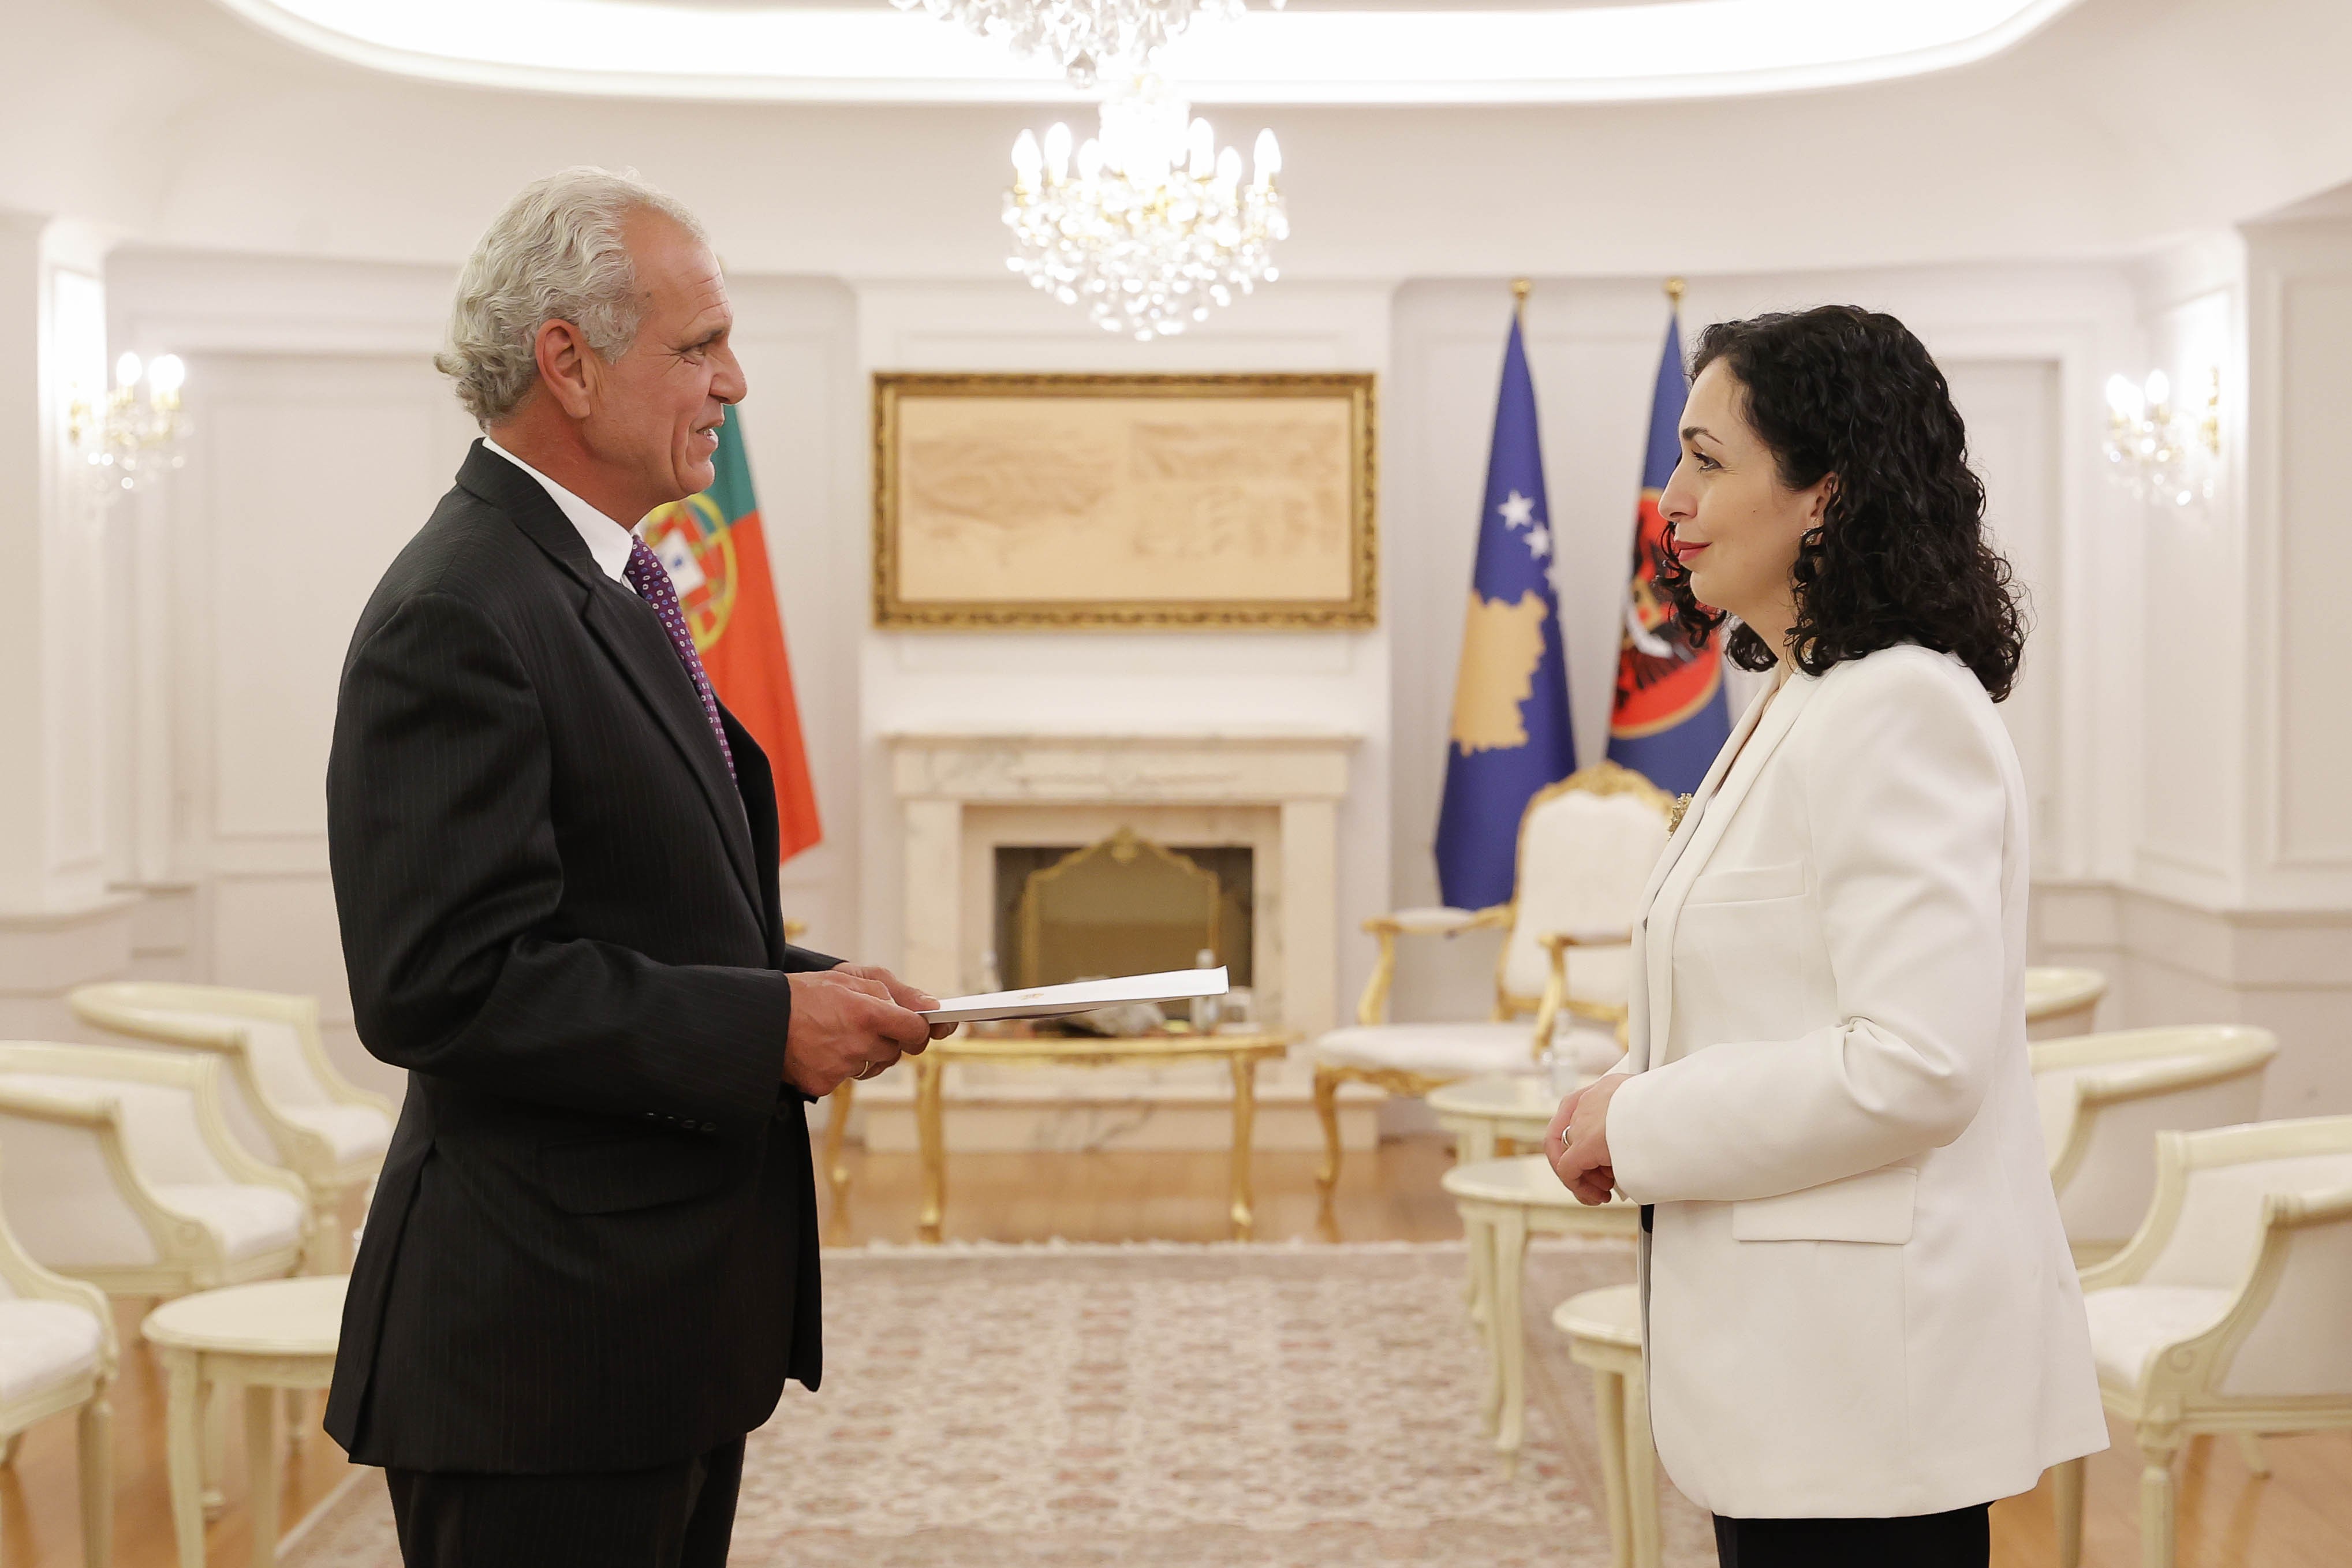  Presidentja Osmani pranoi letrat kredenciale nga ambasadori Portugalisë